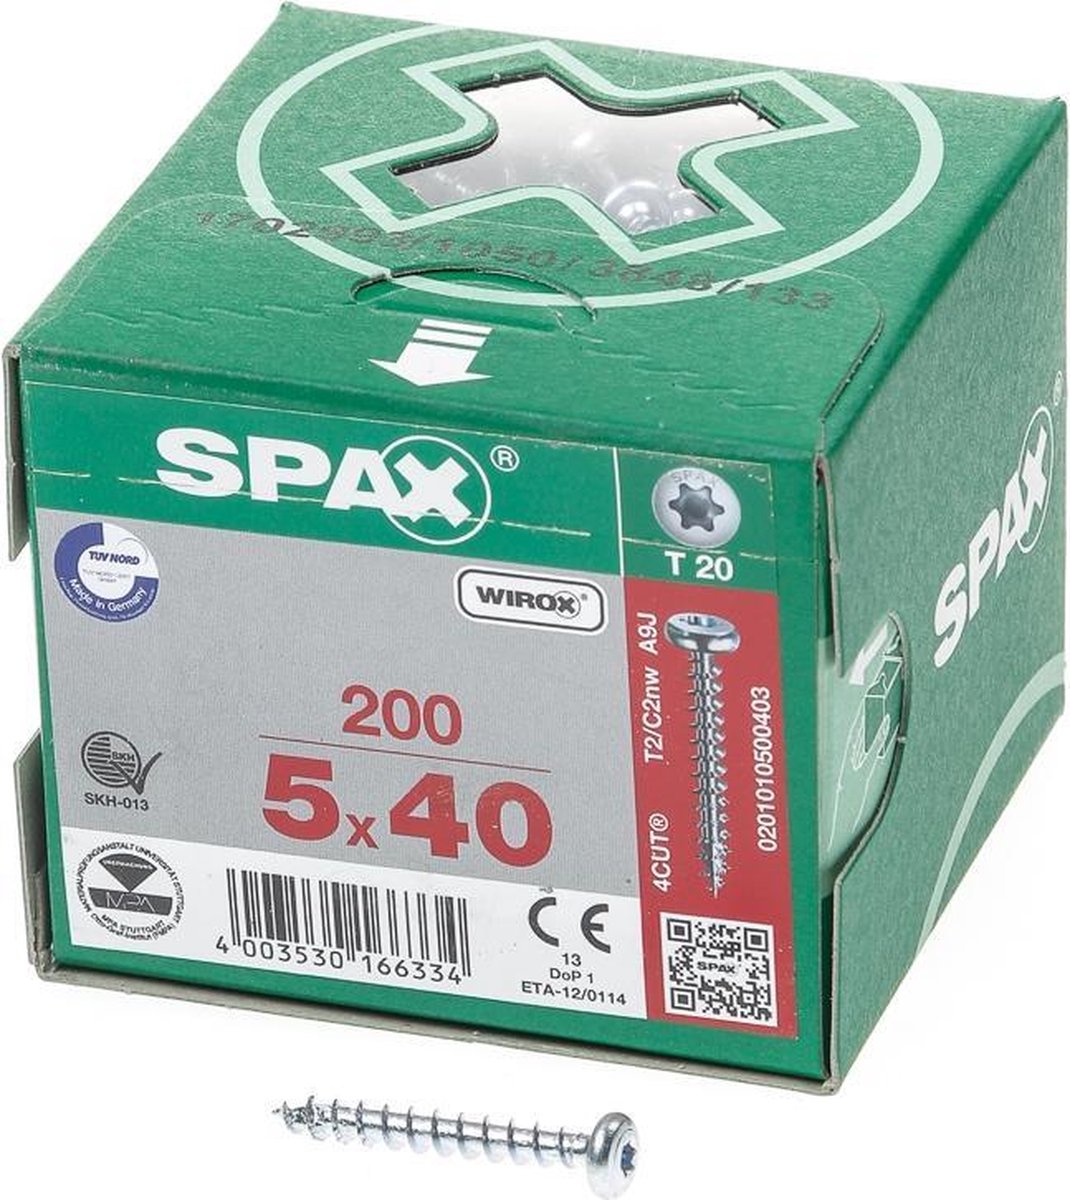 SPAX 201010500403 Universele schroef, Bolkop, 5 x 40, Voldraad, T-STAR plus T20 - WIROX - 200 stuks